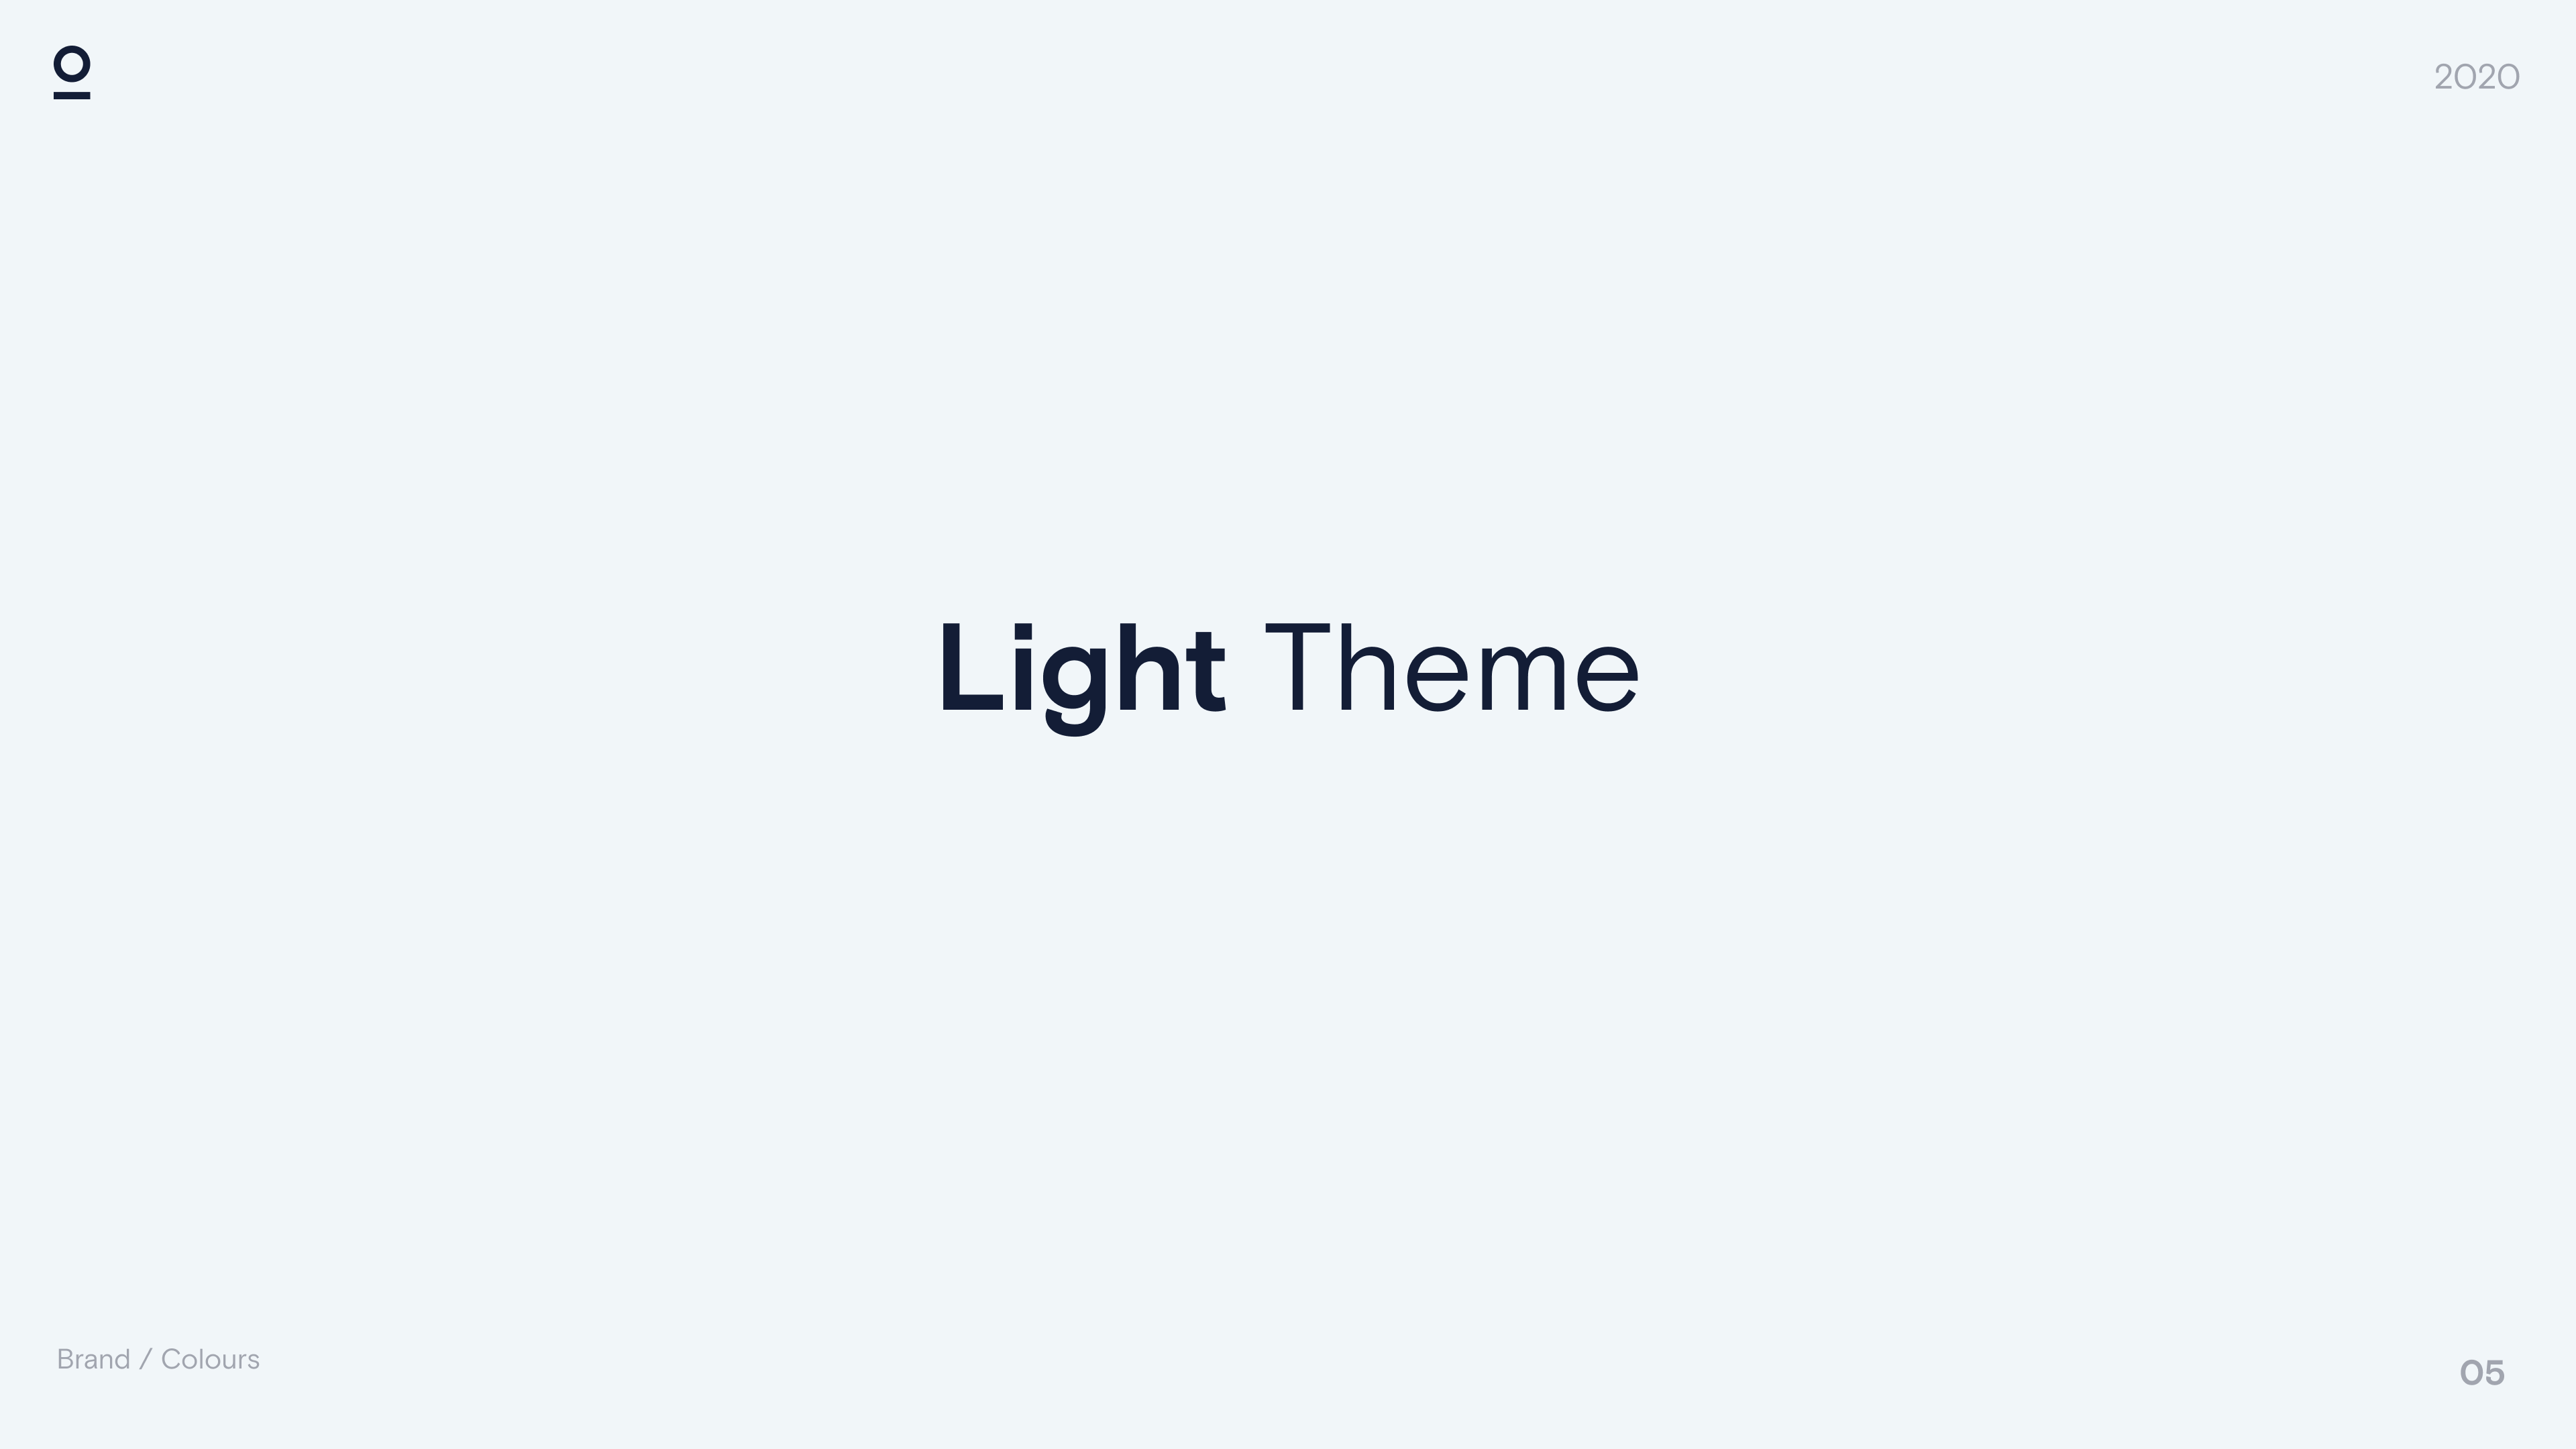 LightTheme_Title